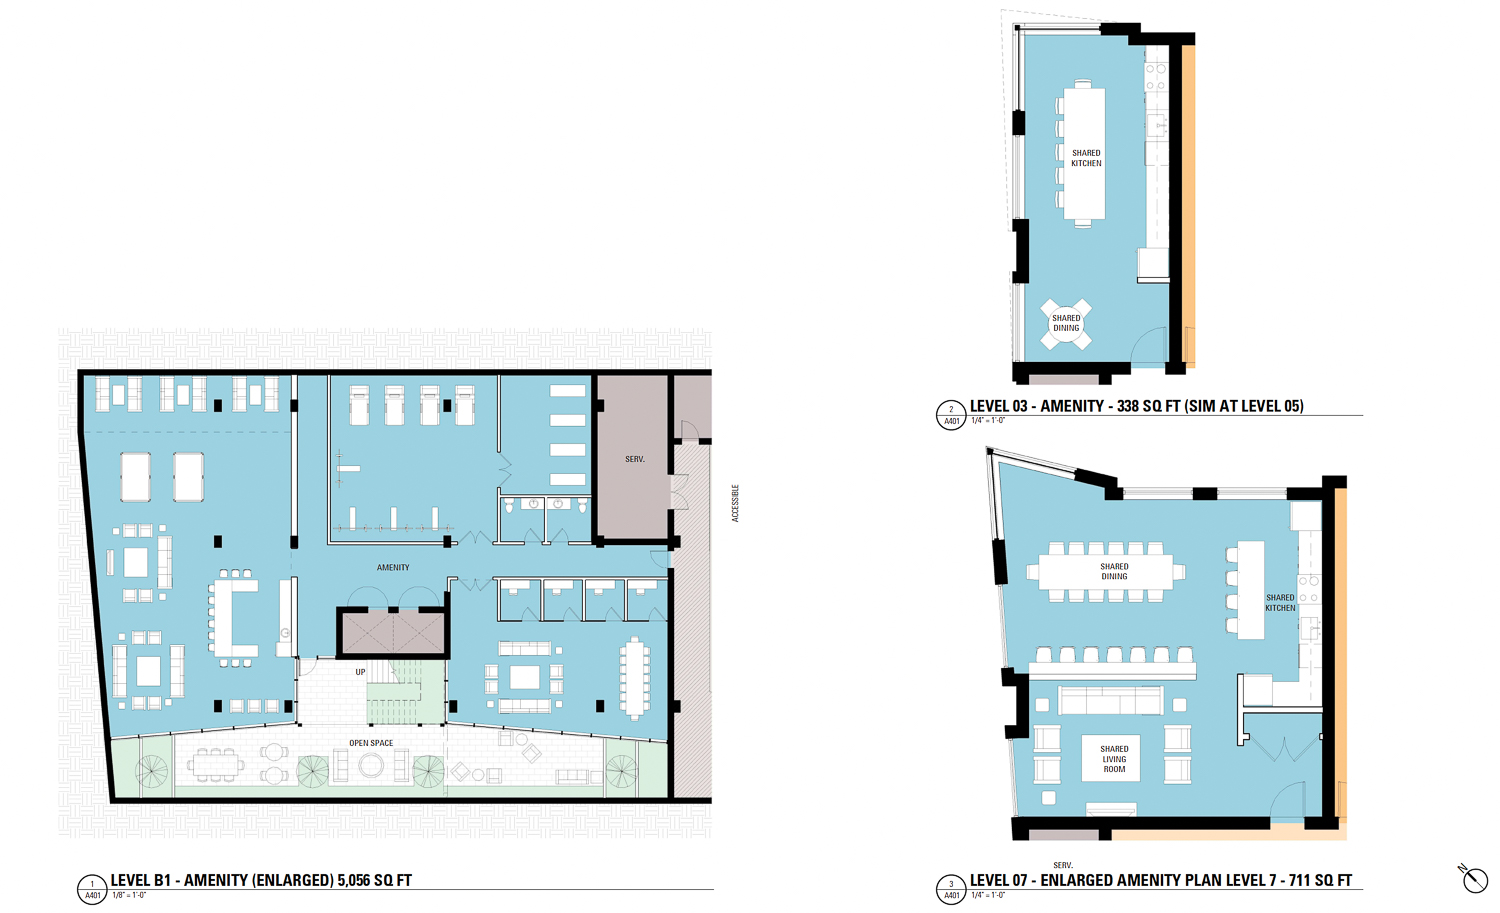 925 Bryant Street amenities floor plans, illustration by BAR Architects